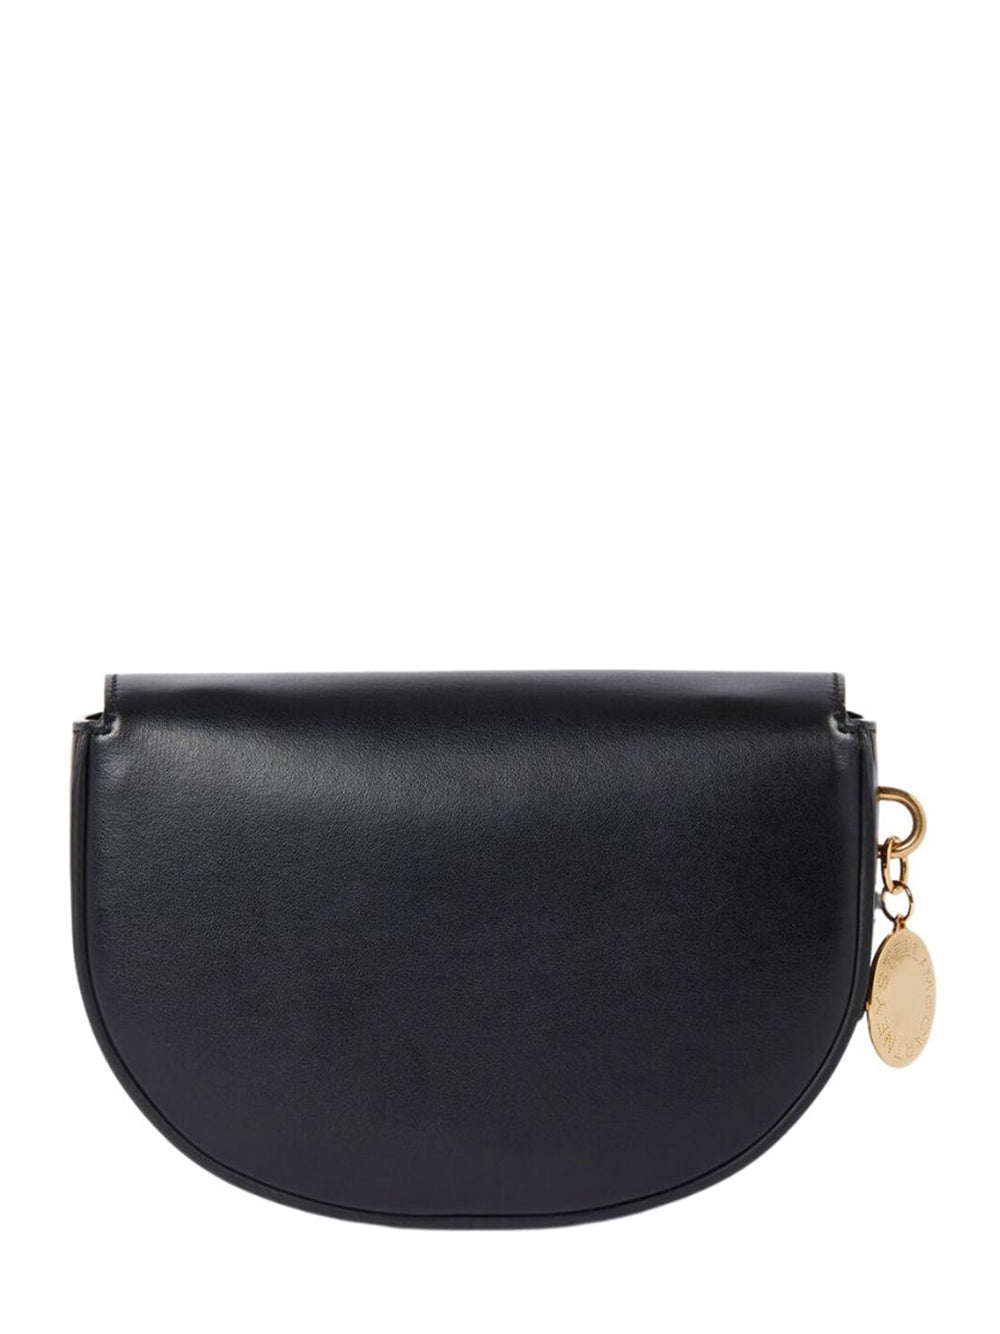 Frayme Whipstitch Small Shoulder Bag (Midnight Black)